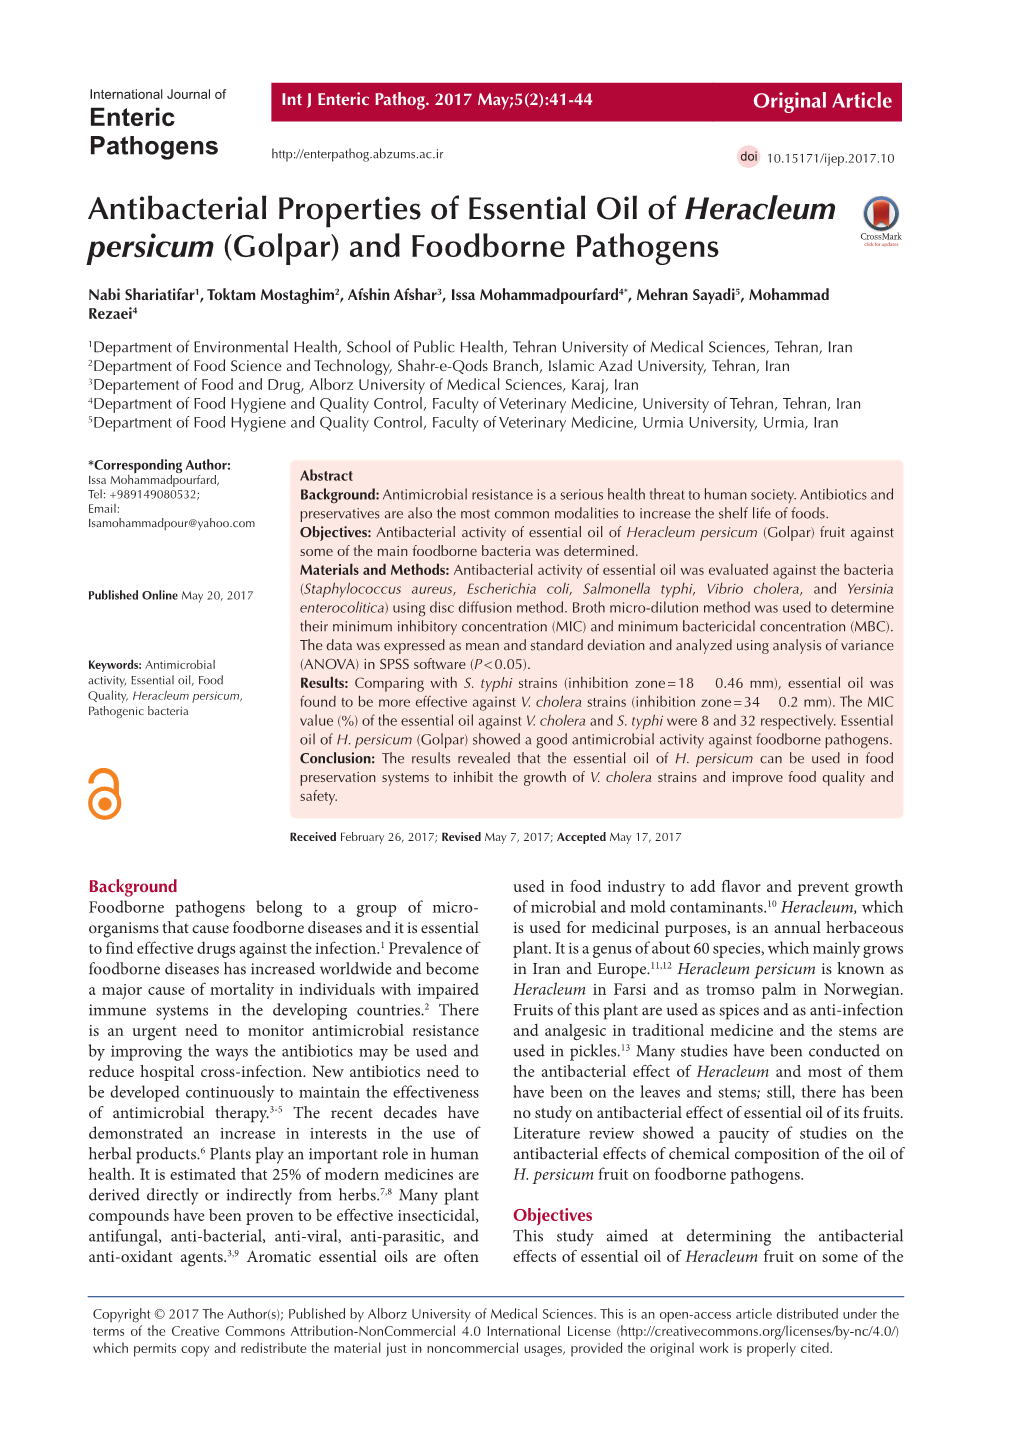 Antibacterial Properties of Essential Oil of Heracleum Persicum (Golpar) and Foodborne Pathogens